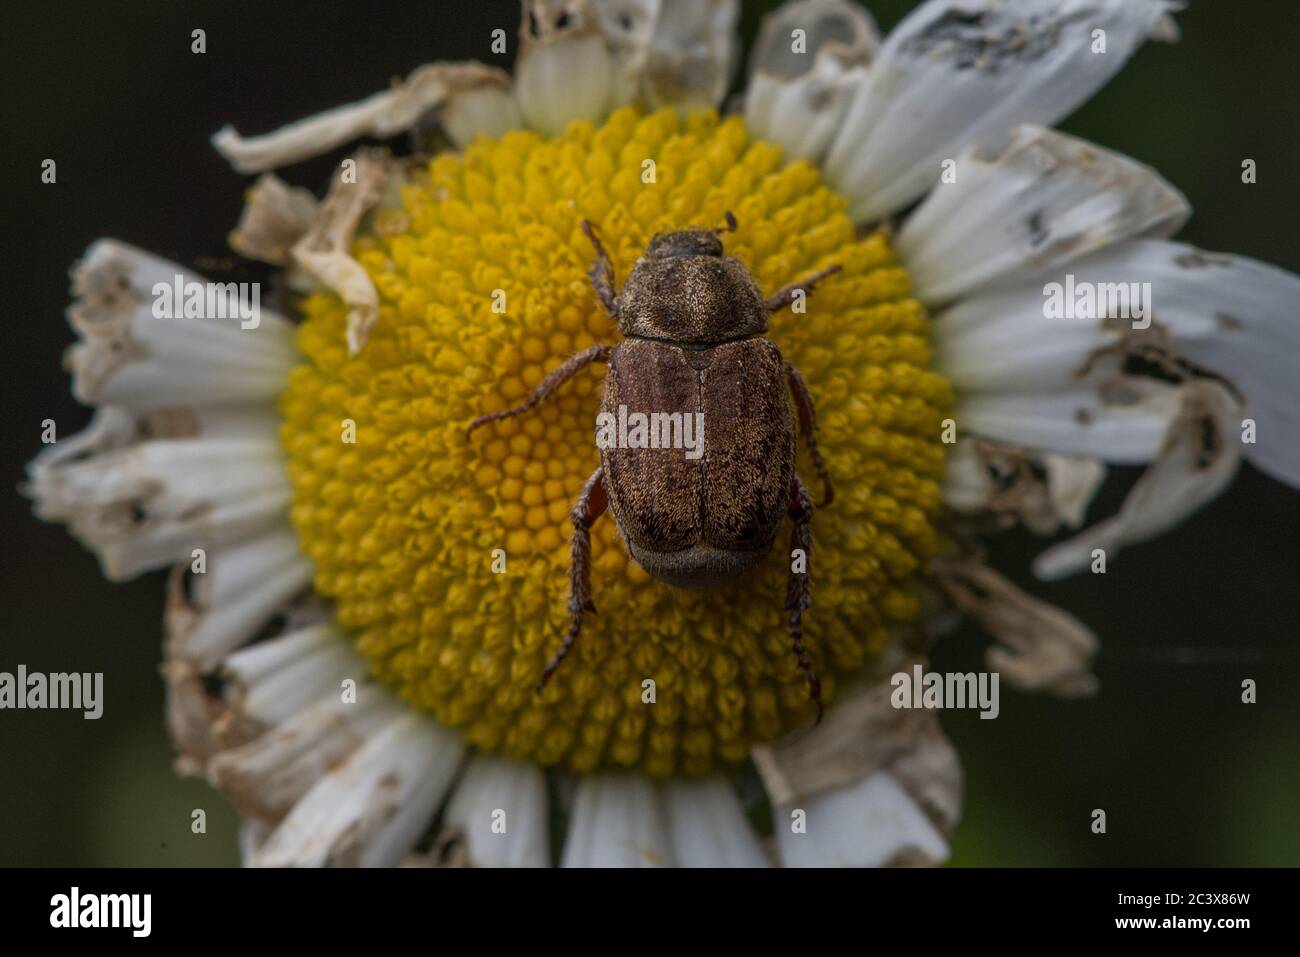 A monkey beetle (Hoplia sp) feeding on a wild daisy flower in California. Stock Photo